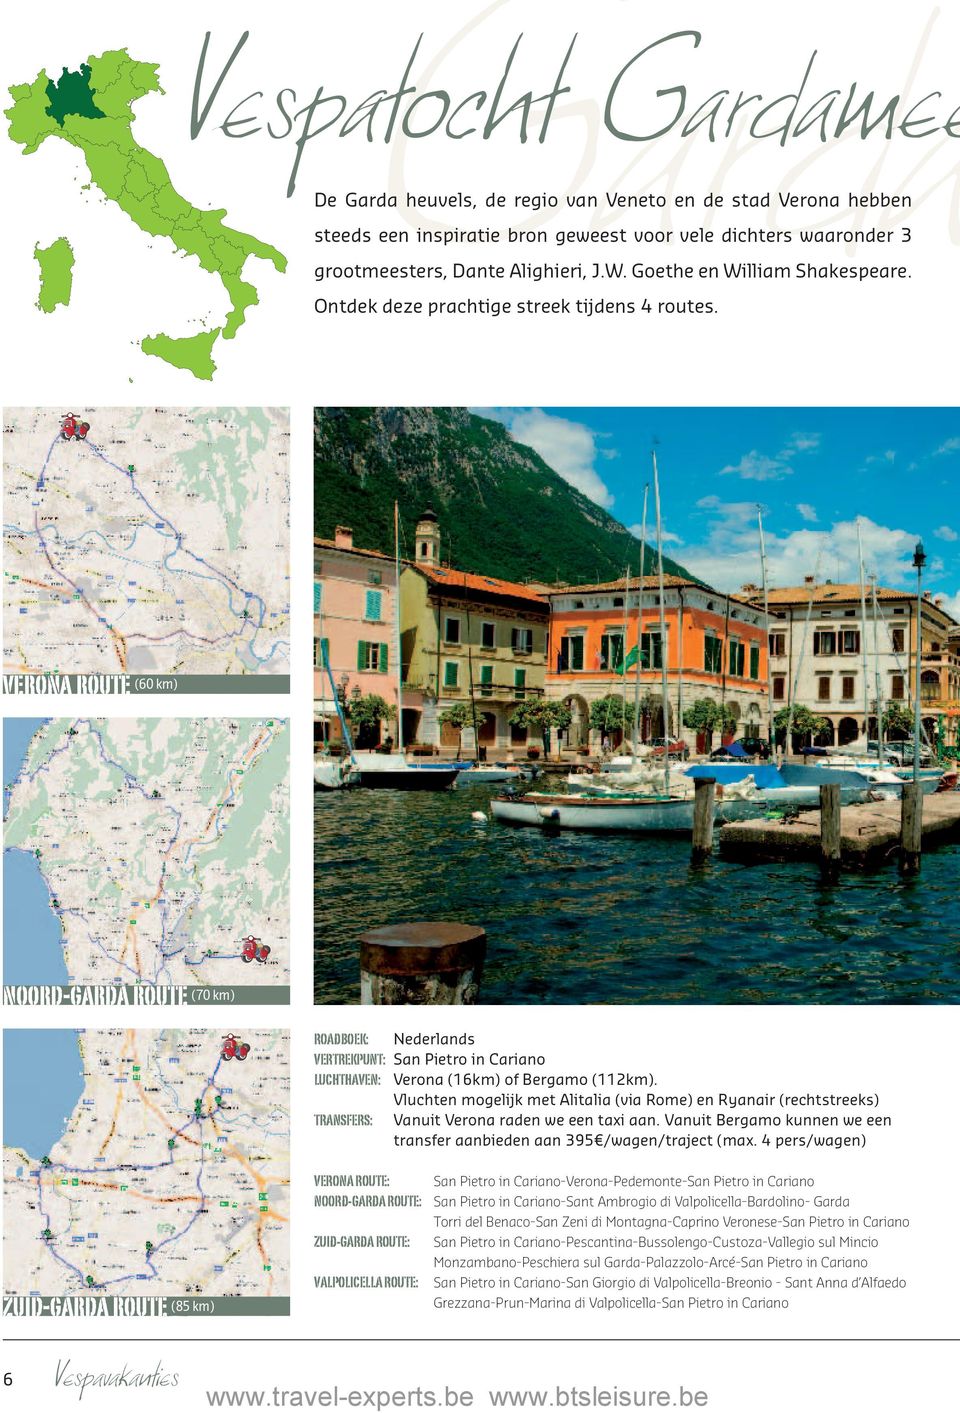 verona route (60 km) noord-garda route (70 km) ROADBOEK: Nederlands VERTREKPUNT: San Pietro in Cariano LUCHTHAVEN: Verona (16km) of Bergamo (112km).